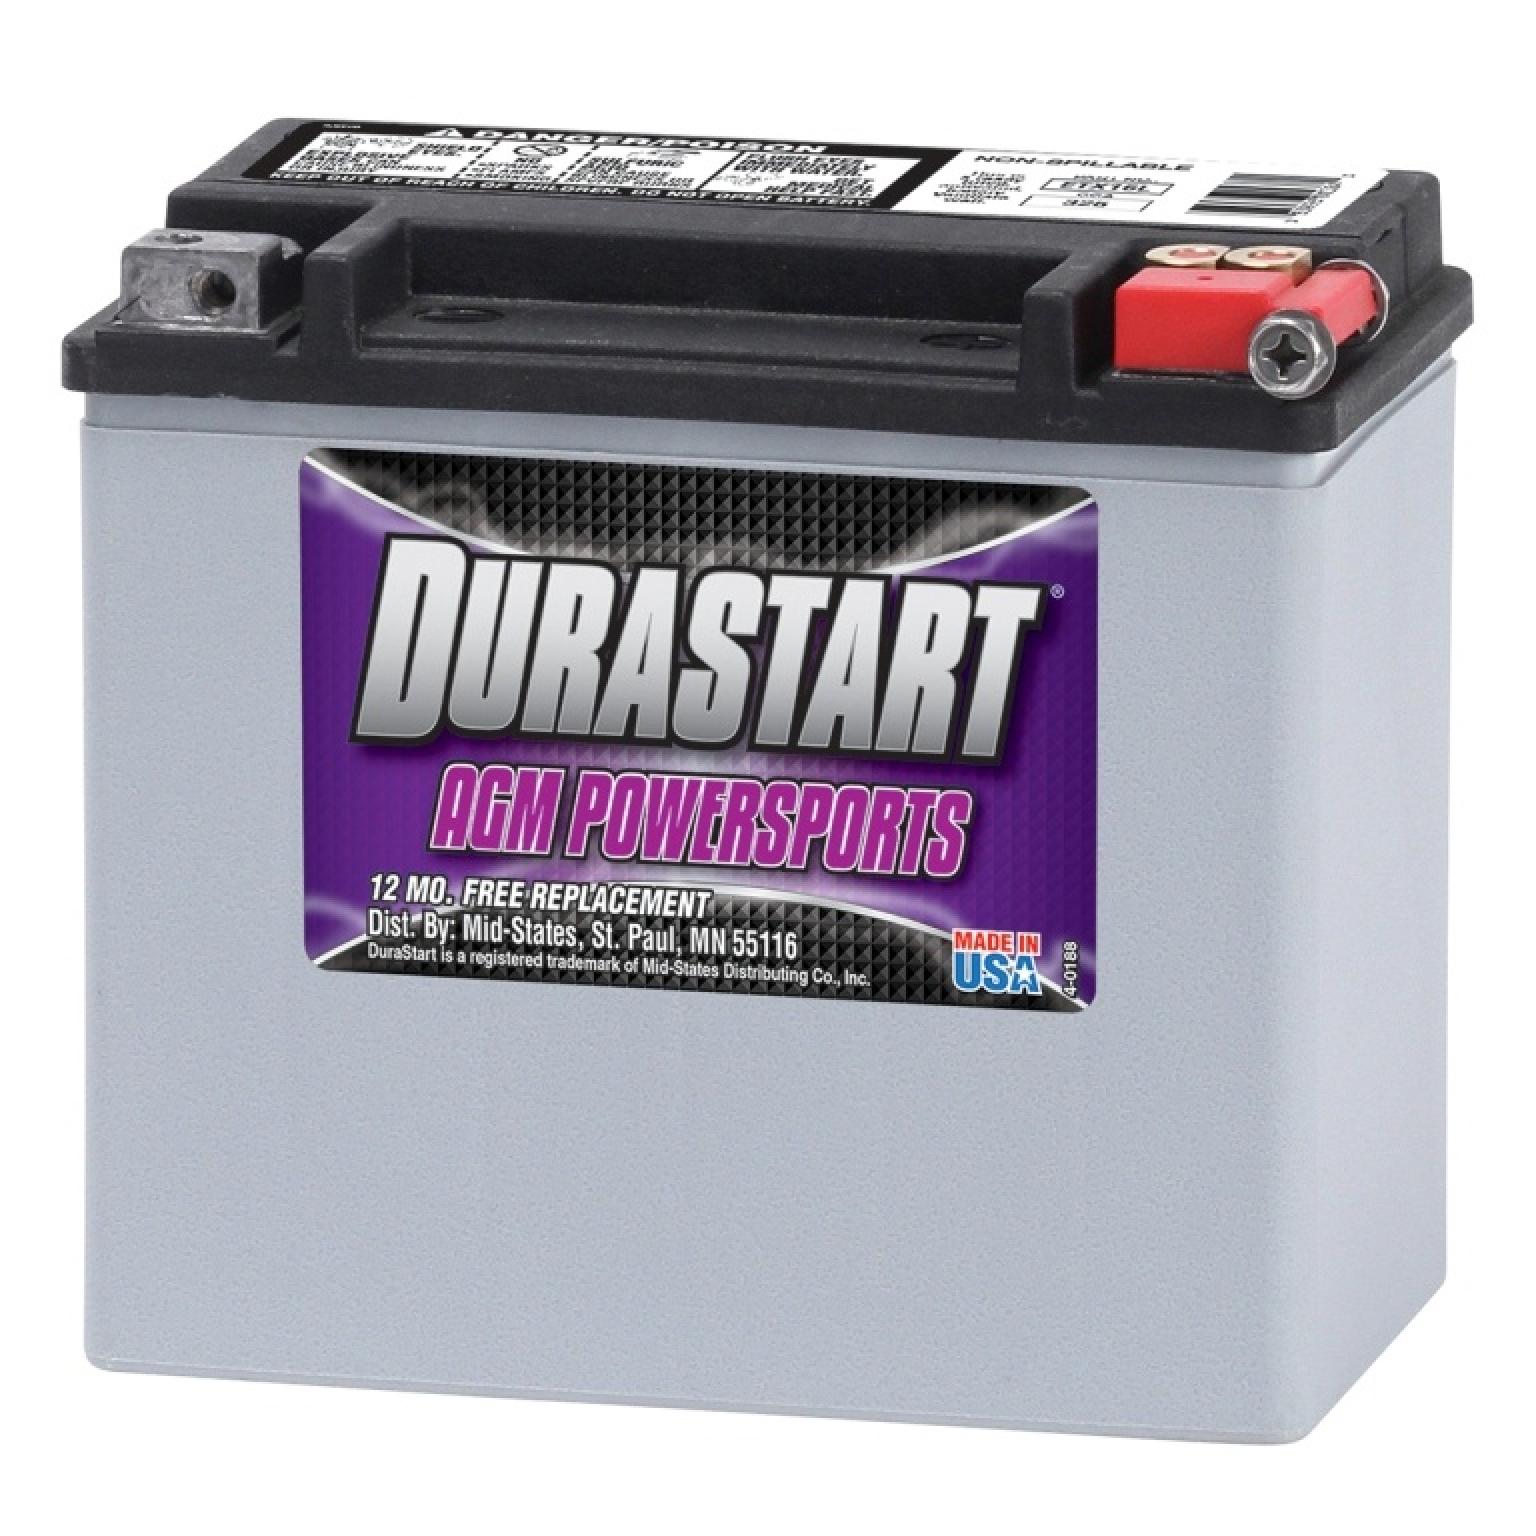 Durastart AGM Powersports Battery ETX16L